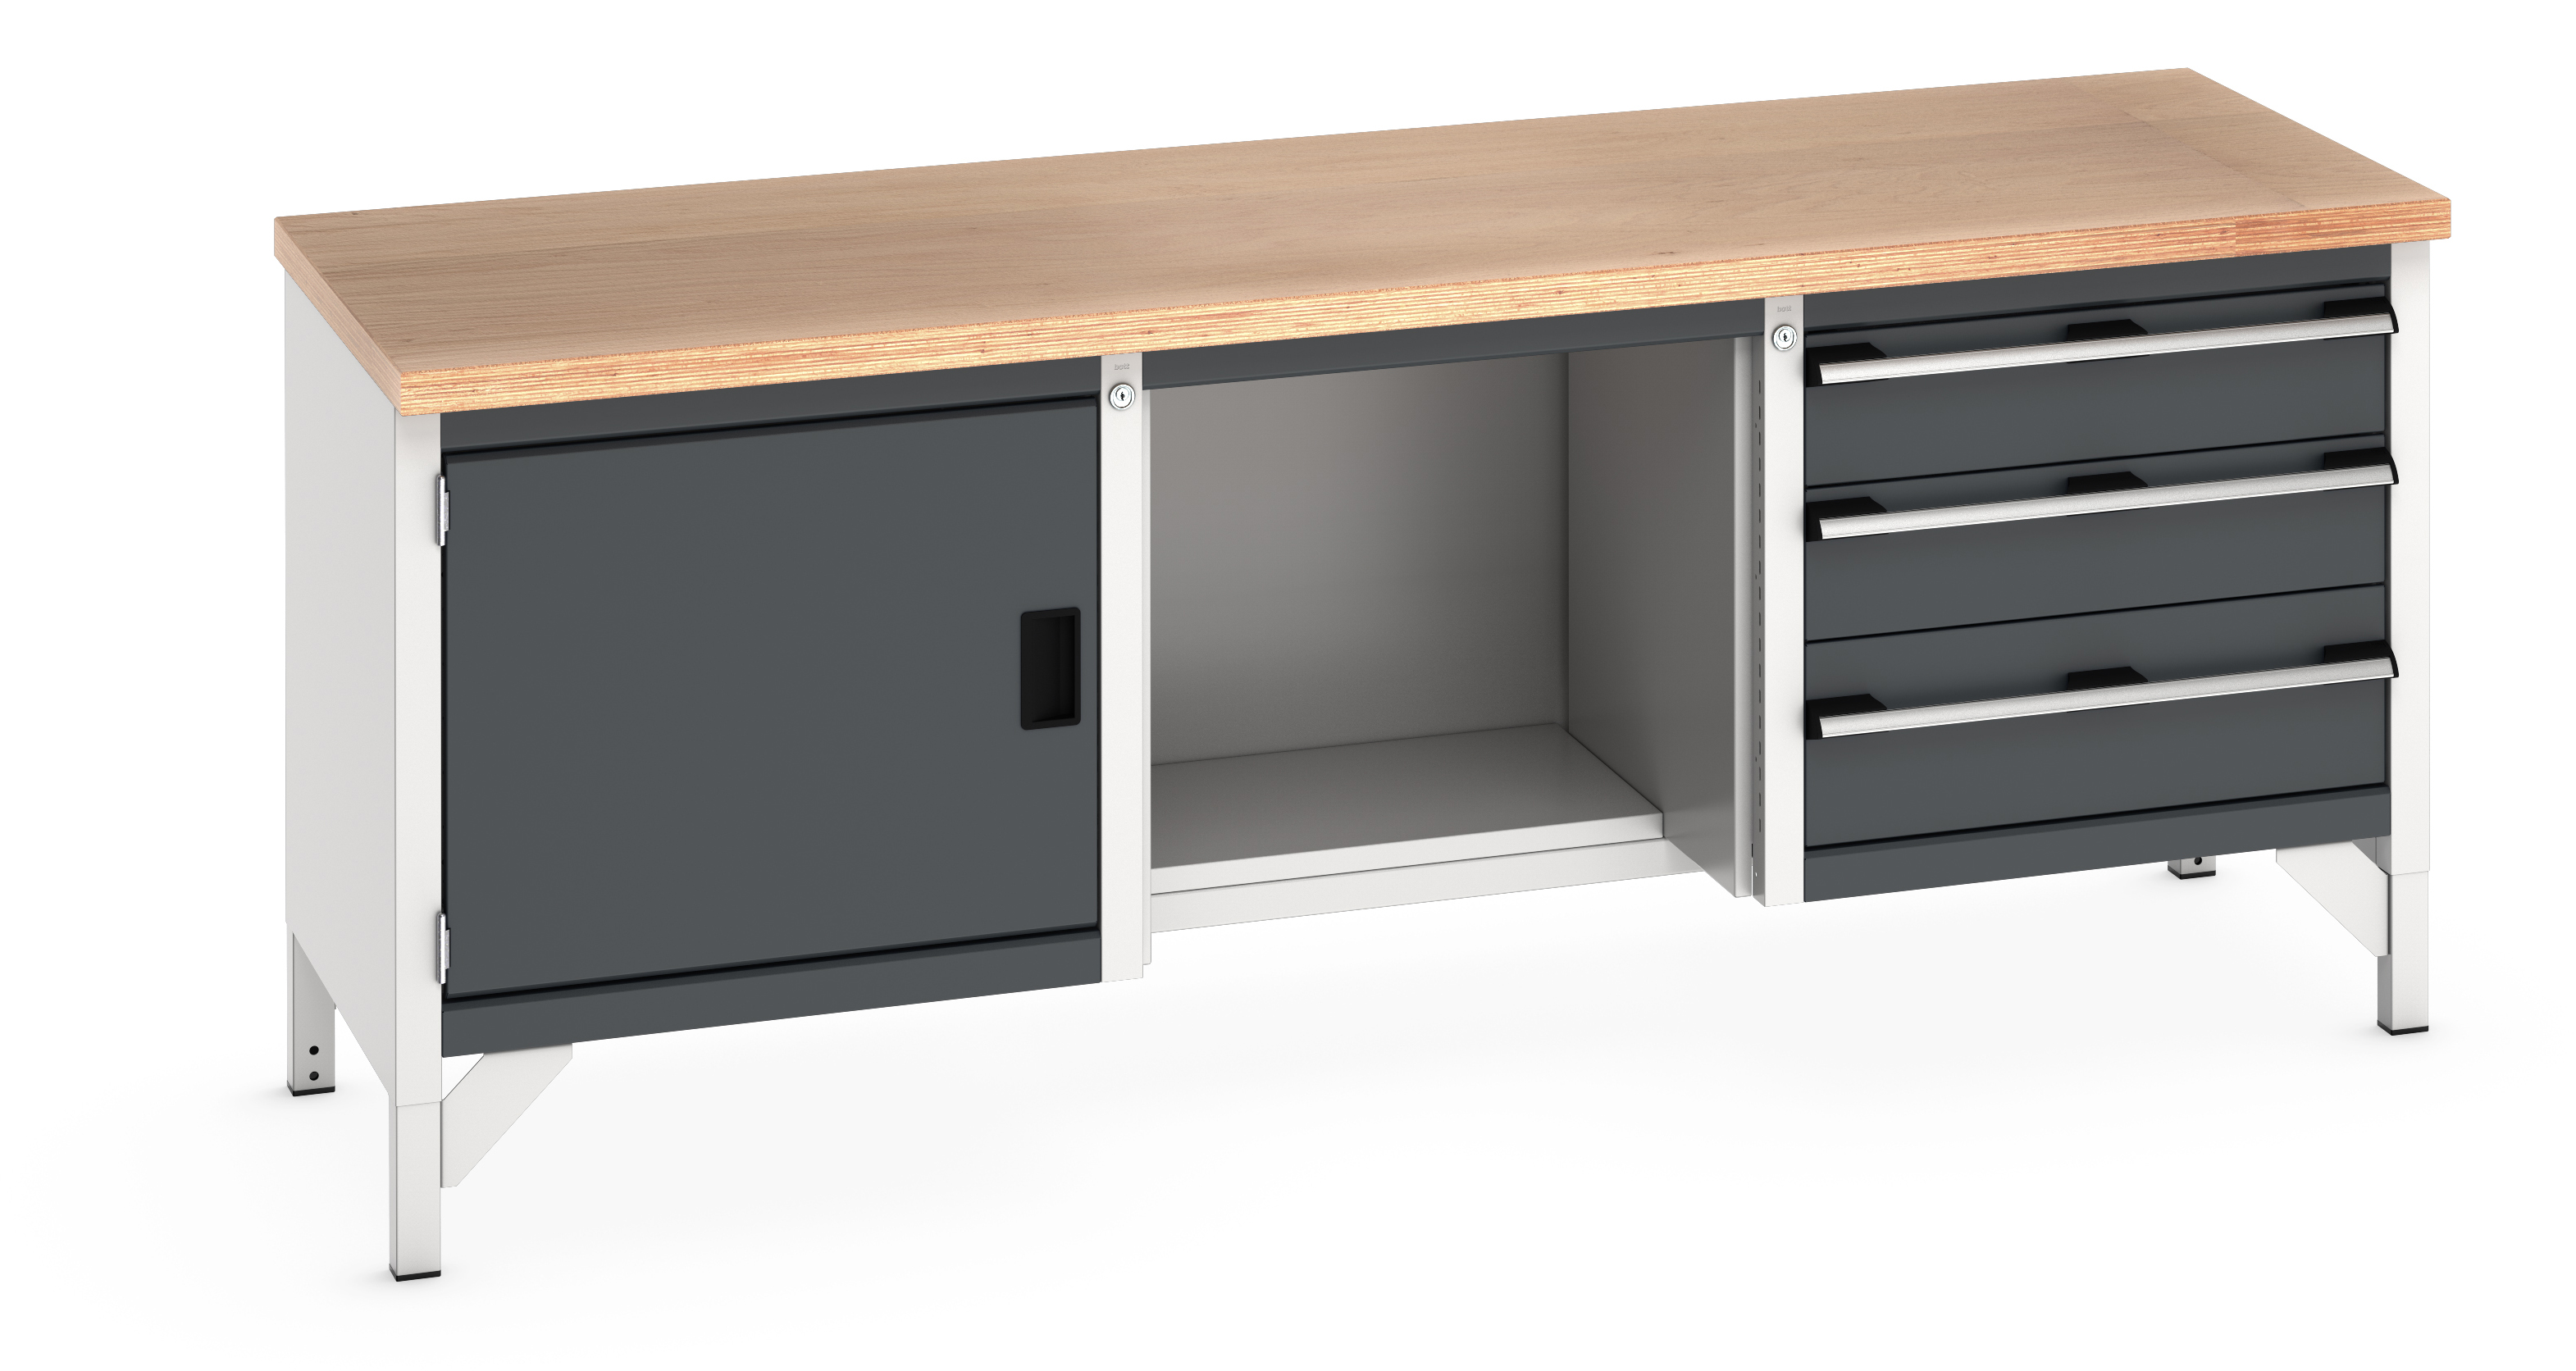 Bott Cubio Storage Bench With Full Cupboard / Open With Half Depth Base Shelf / 3 Drawer Cabinet - 41002070.19V